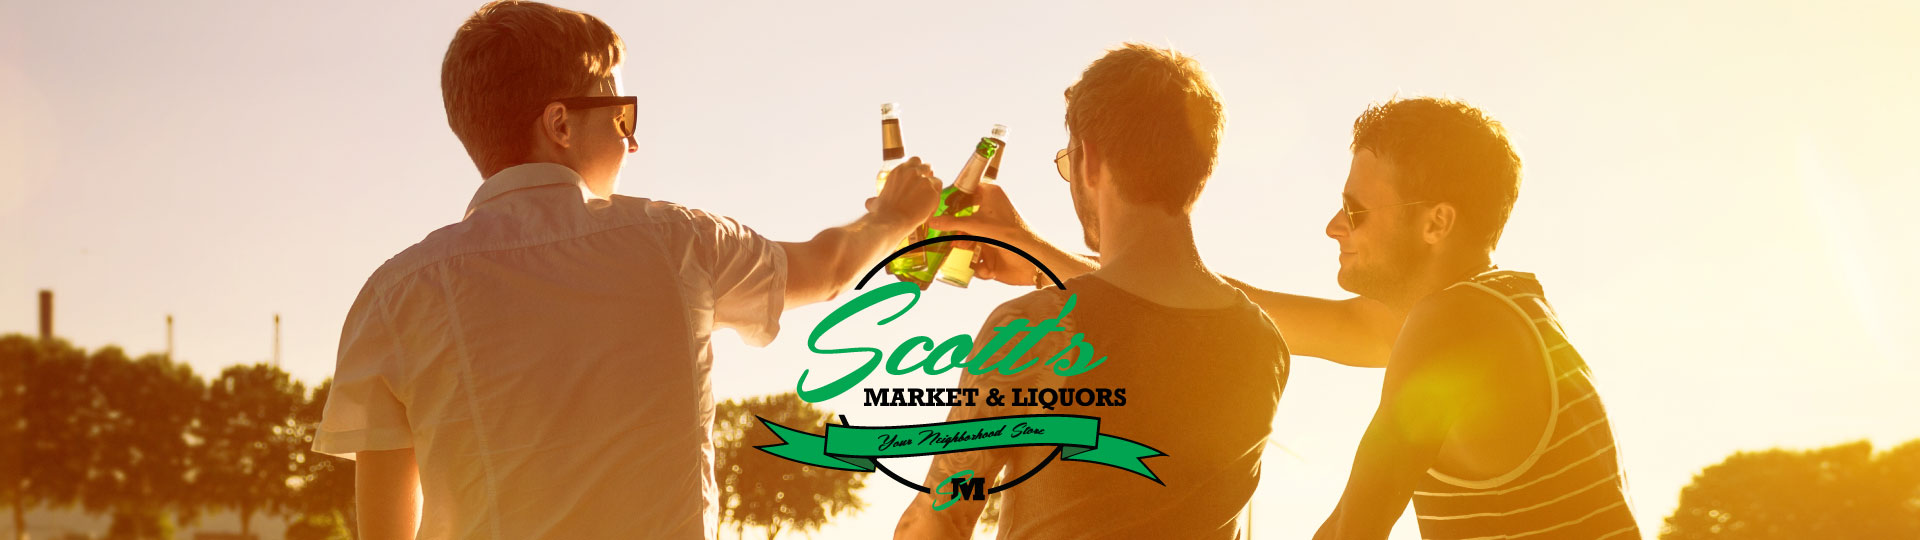 Scott's Market & Liquors